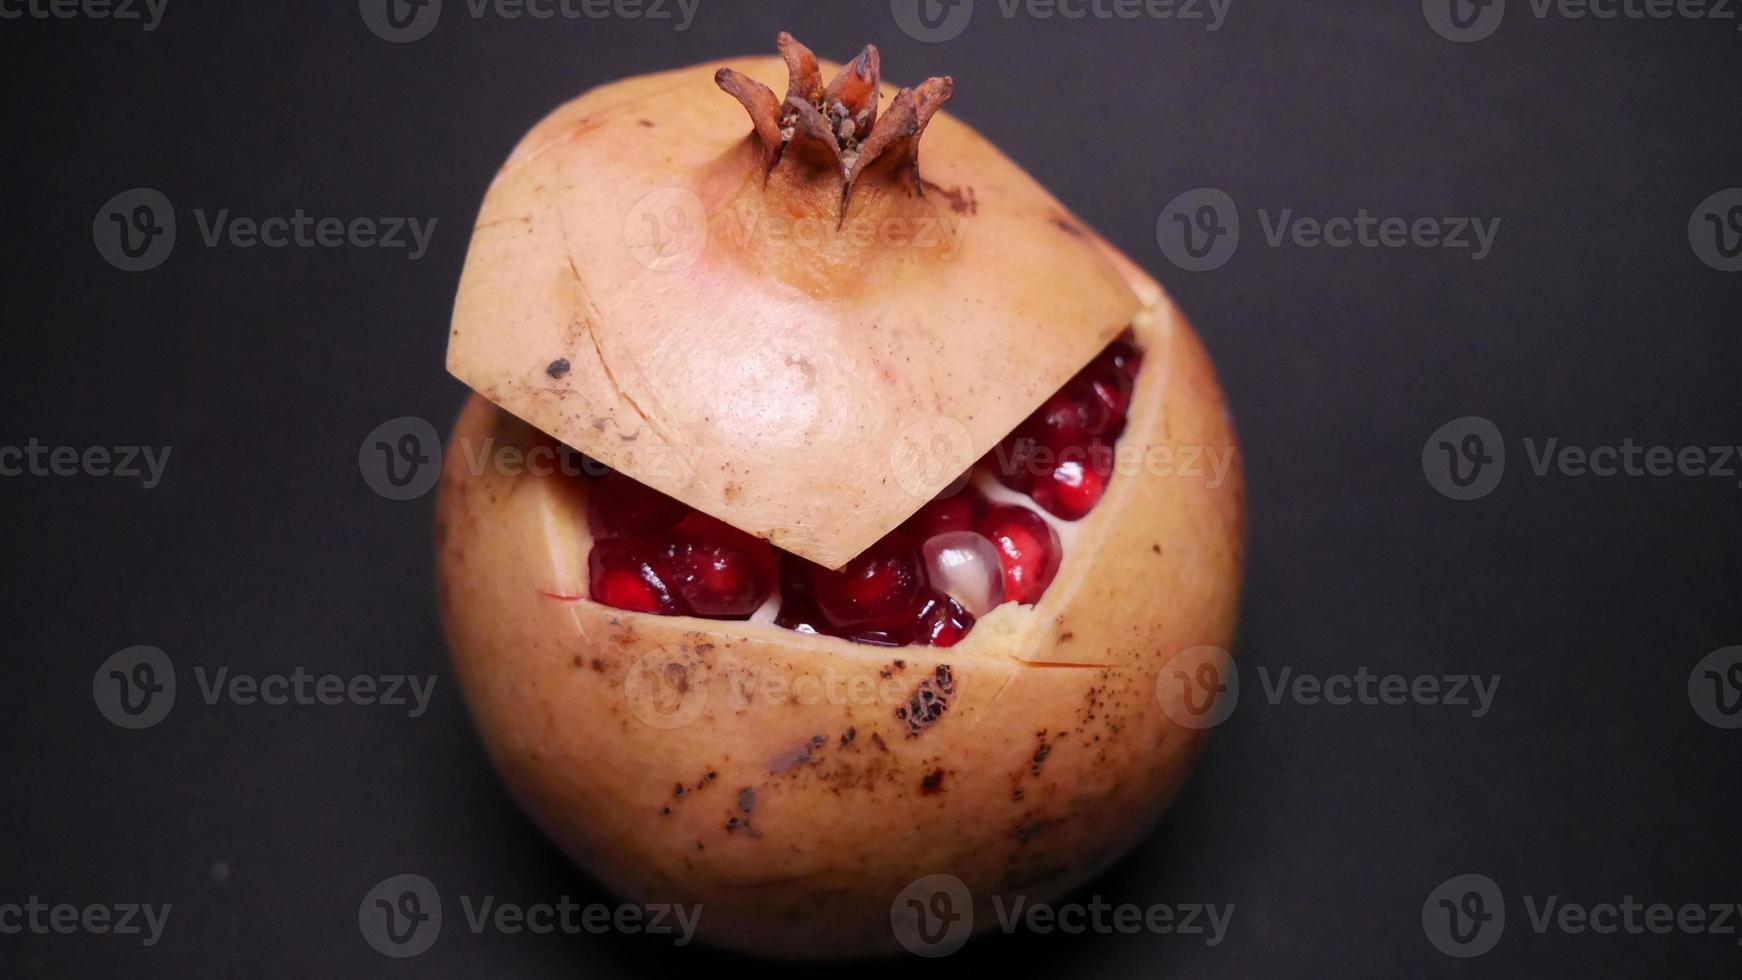 Ripe pomegranate   on  a black background photo